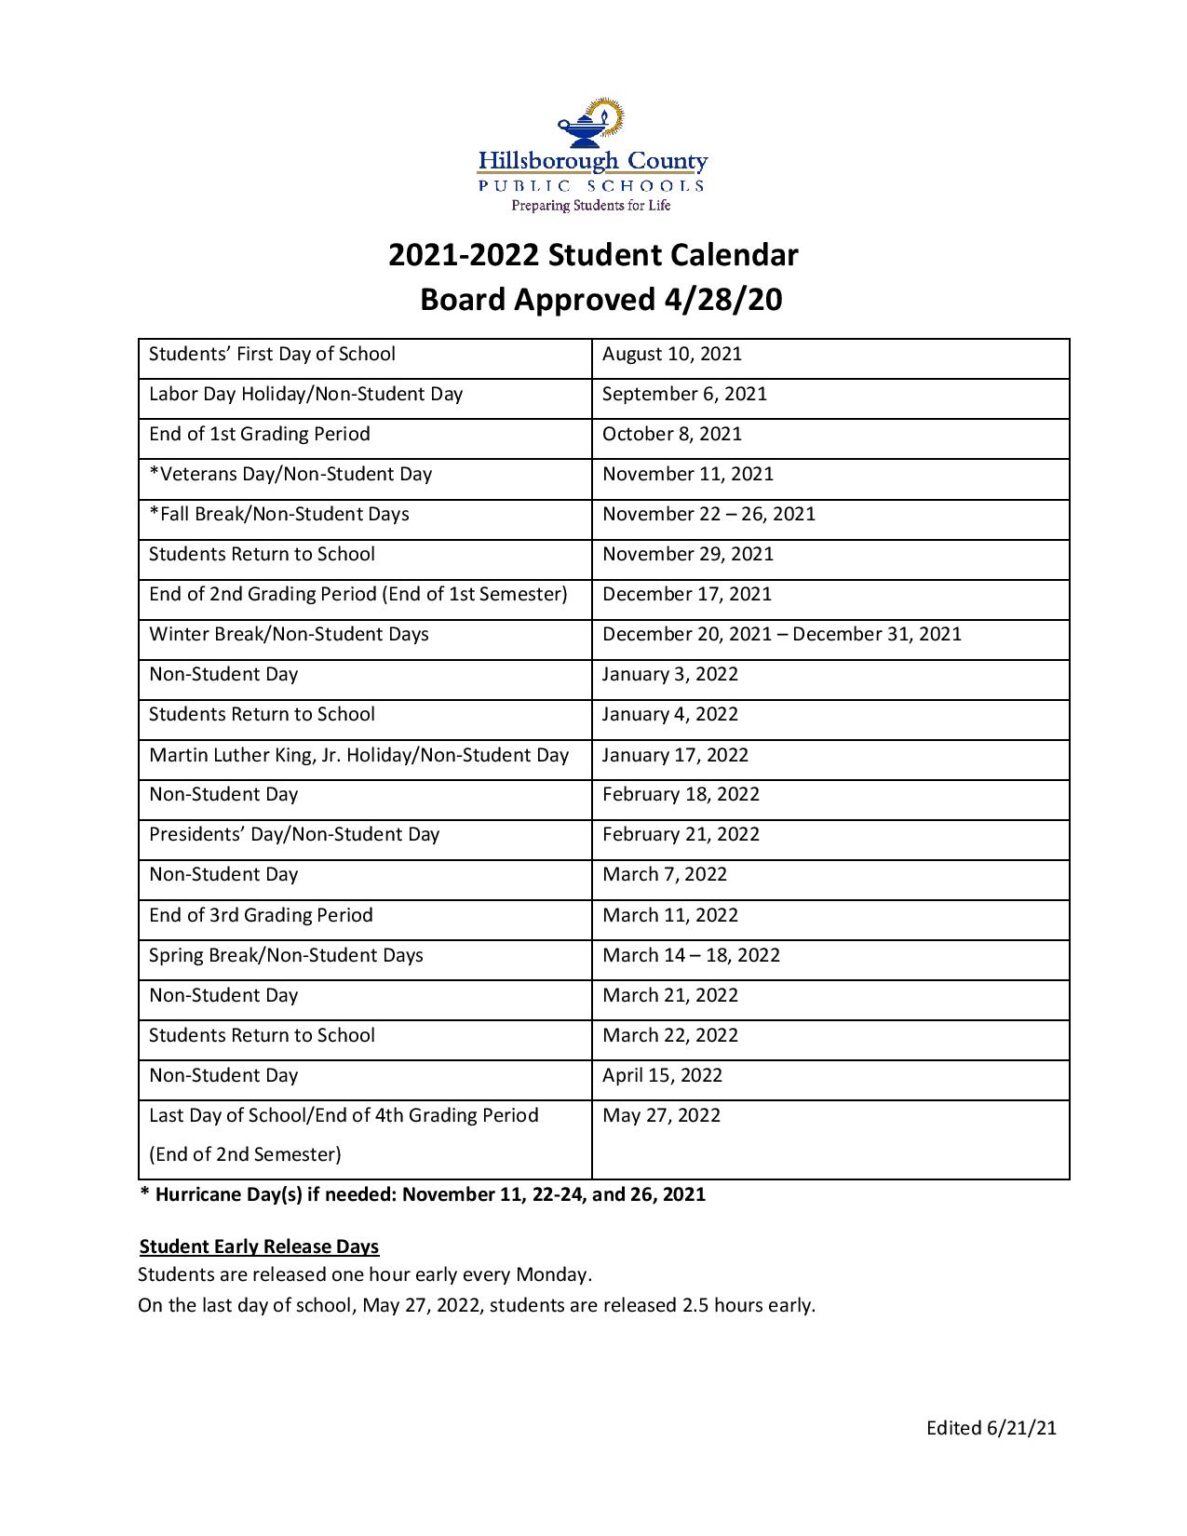 Hillsborough County Public School Calendar 20212022